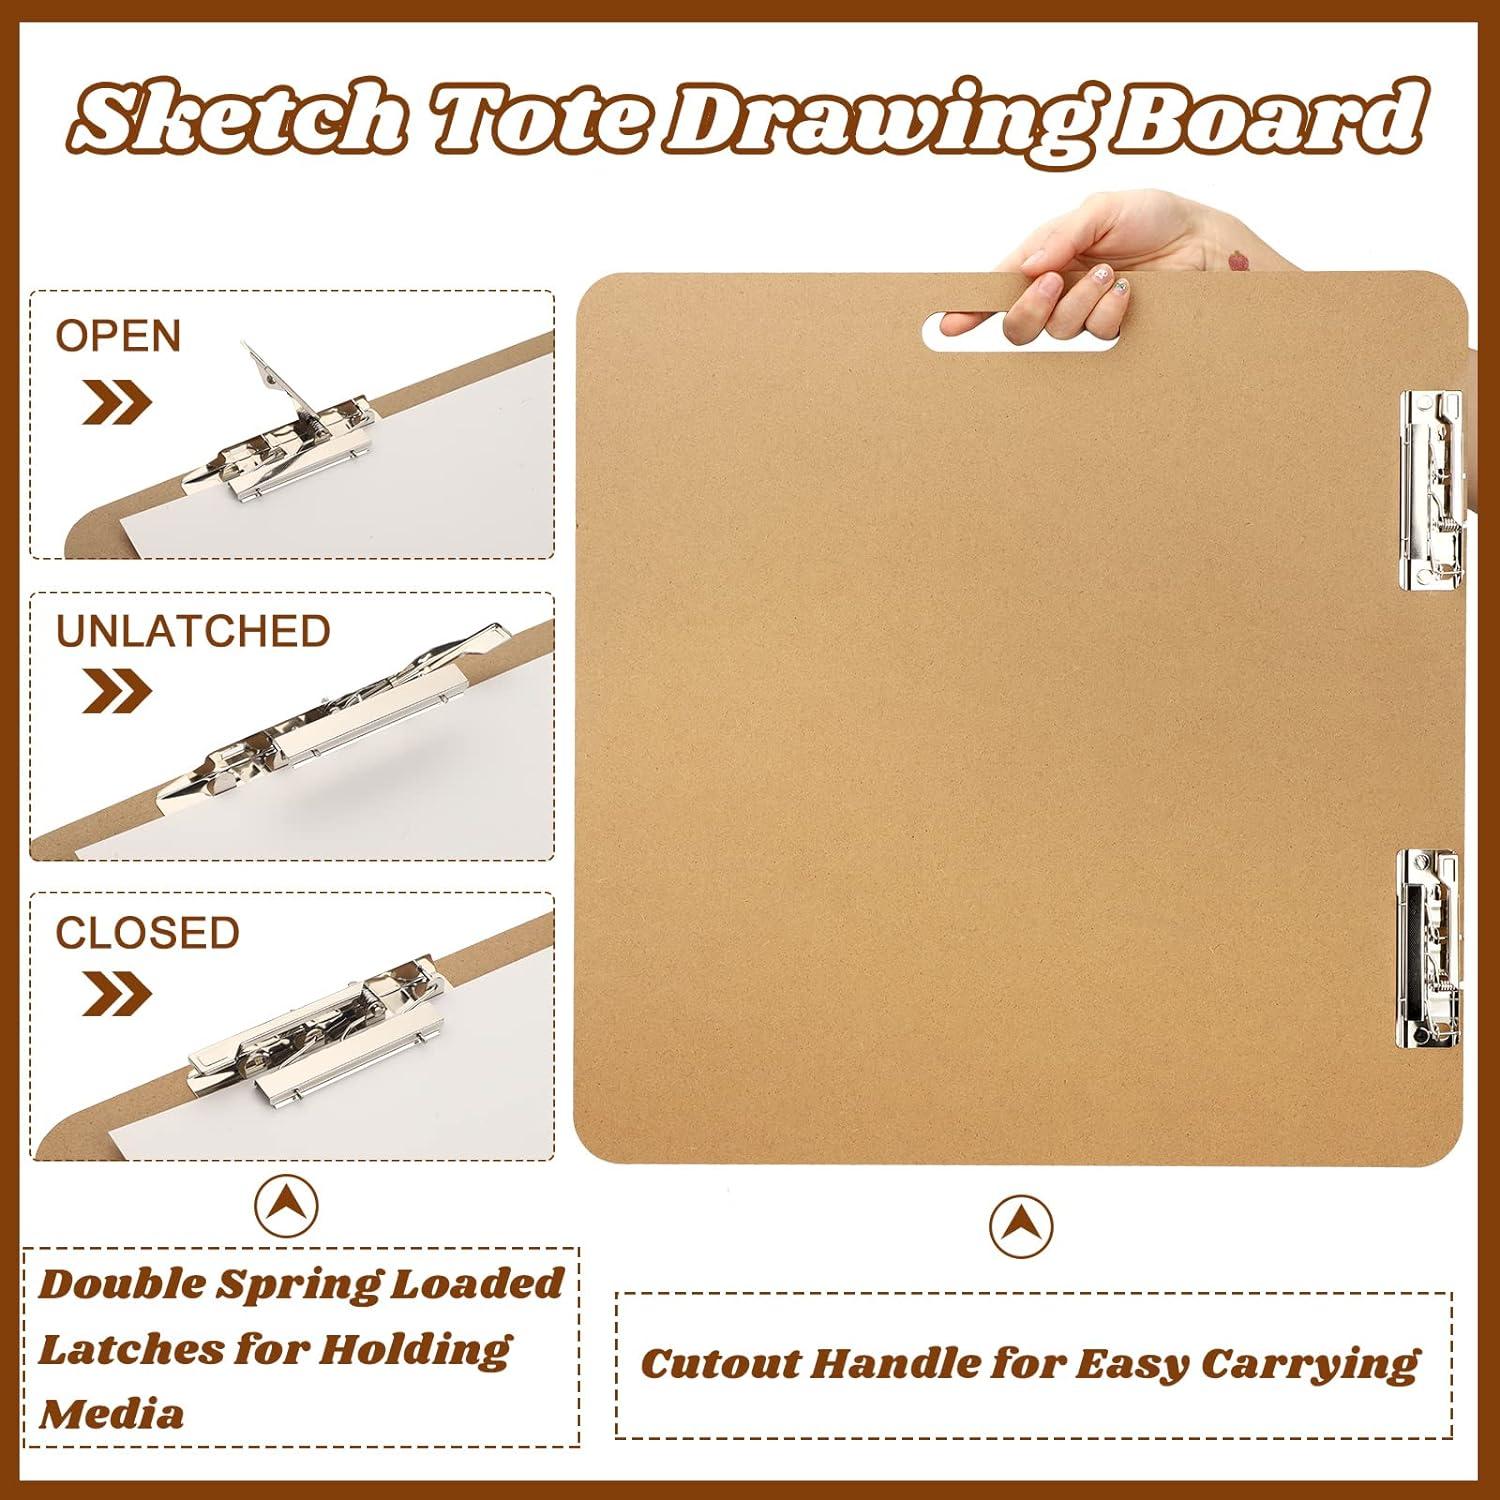 Sketch Drawing Board